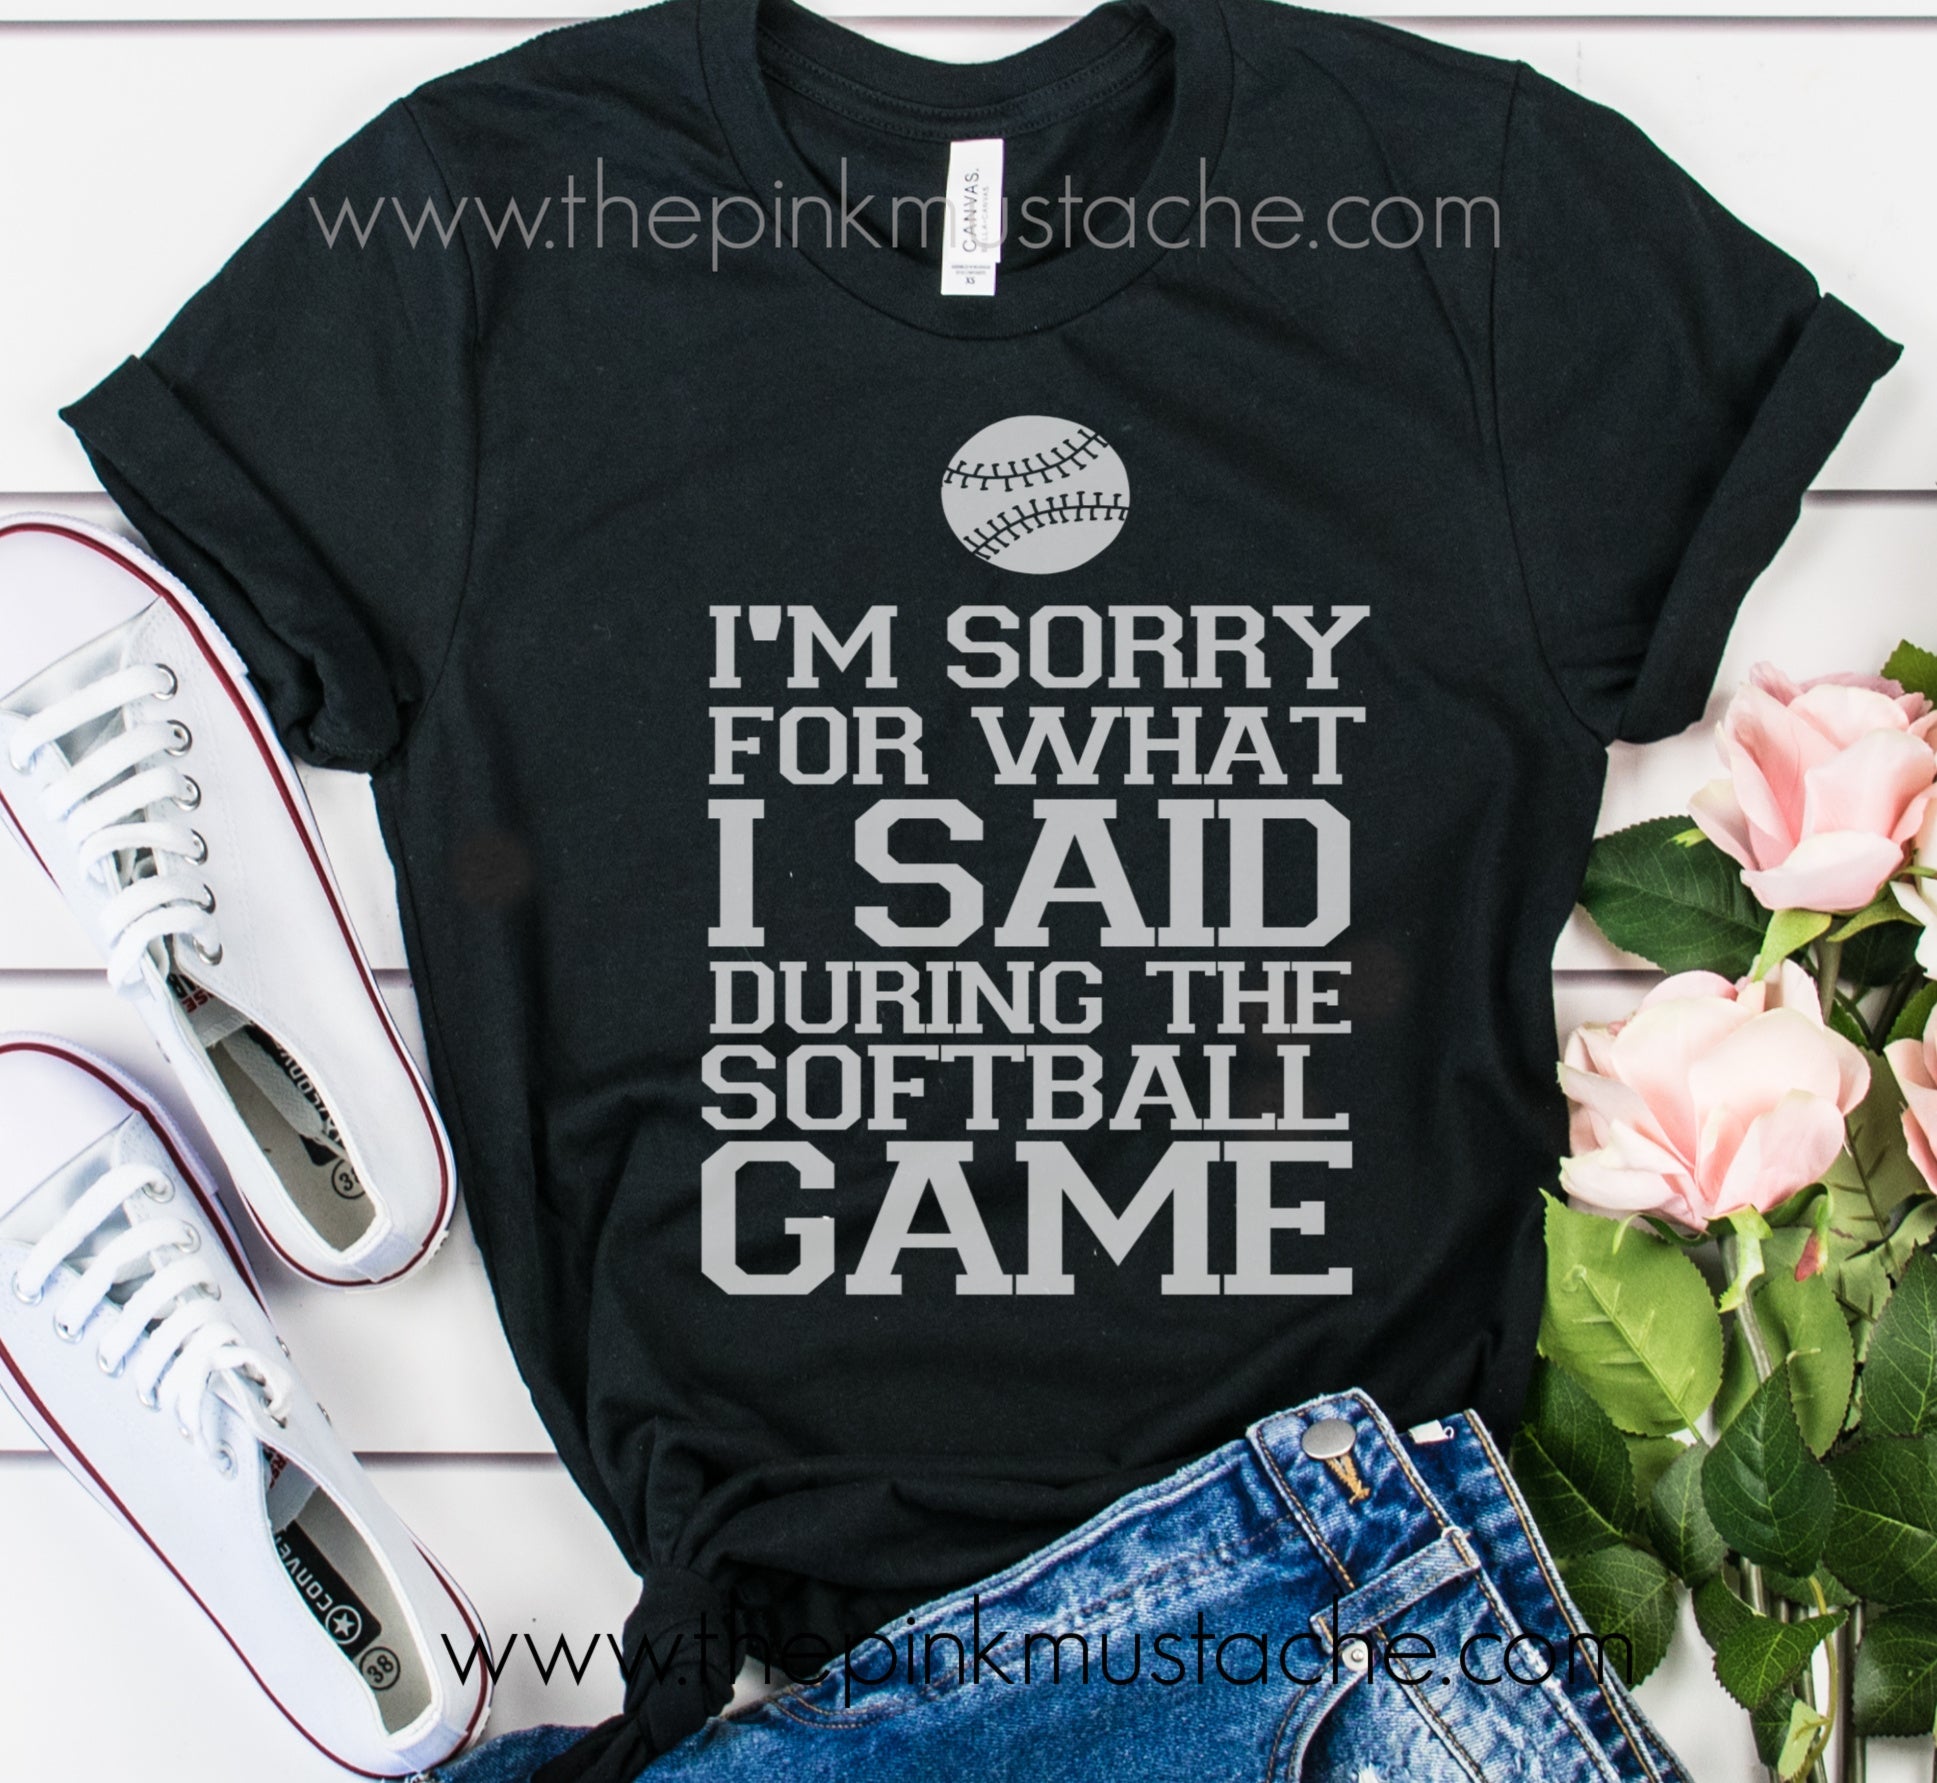 I'm Sorry for What I Said at The Softball Game T-Shirt/ Funny Softball Mom Shirt L